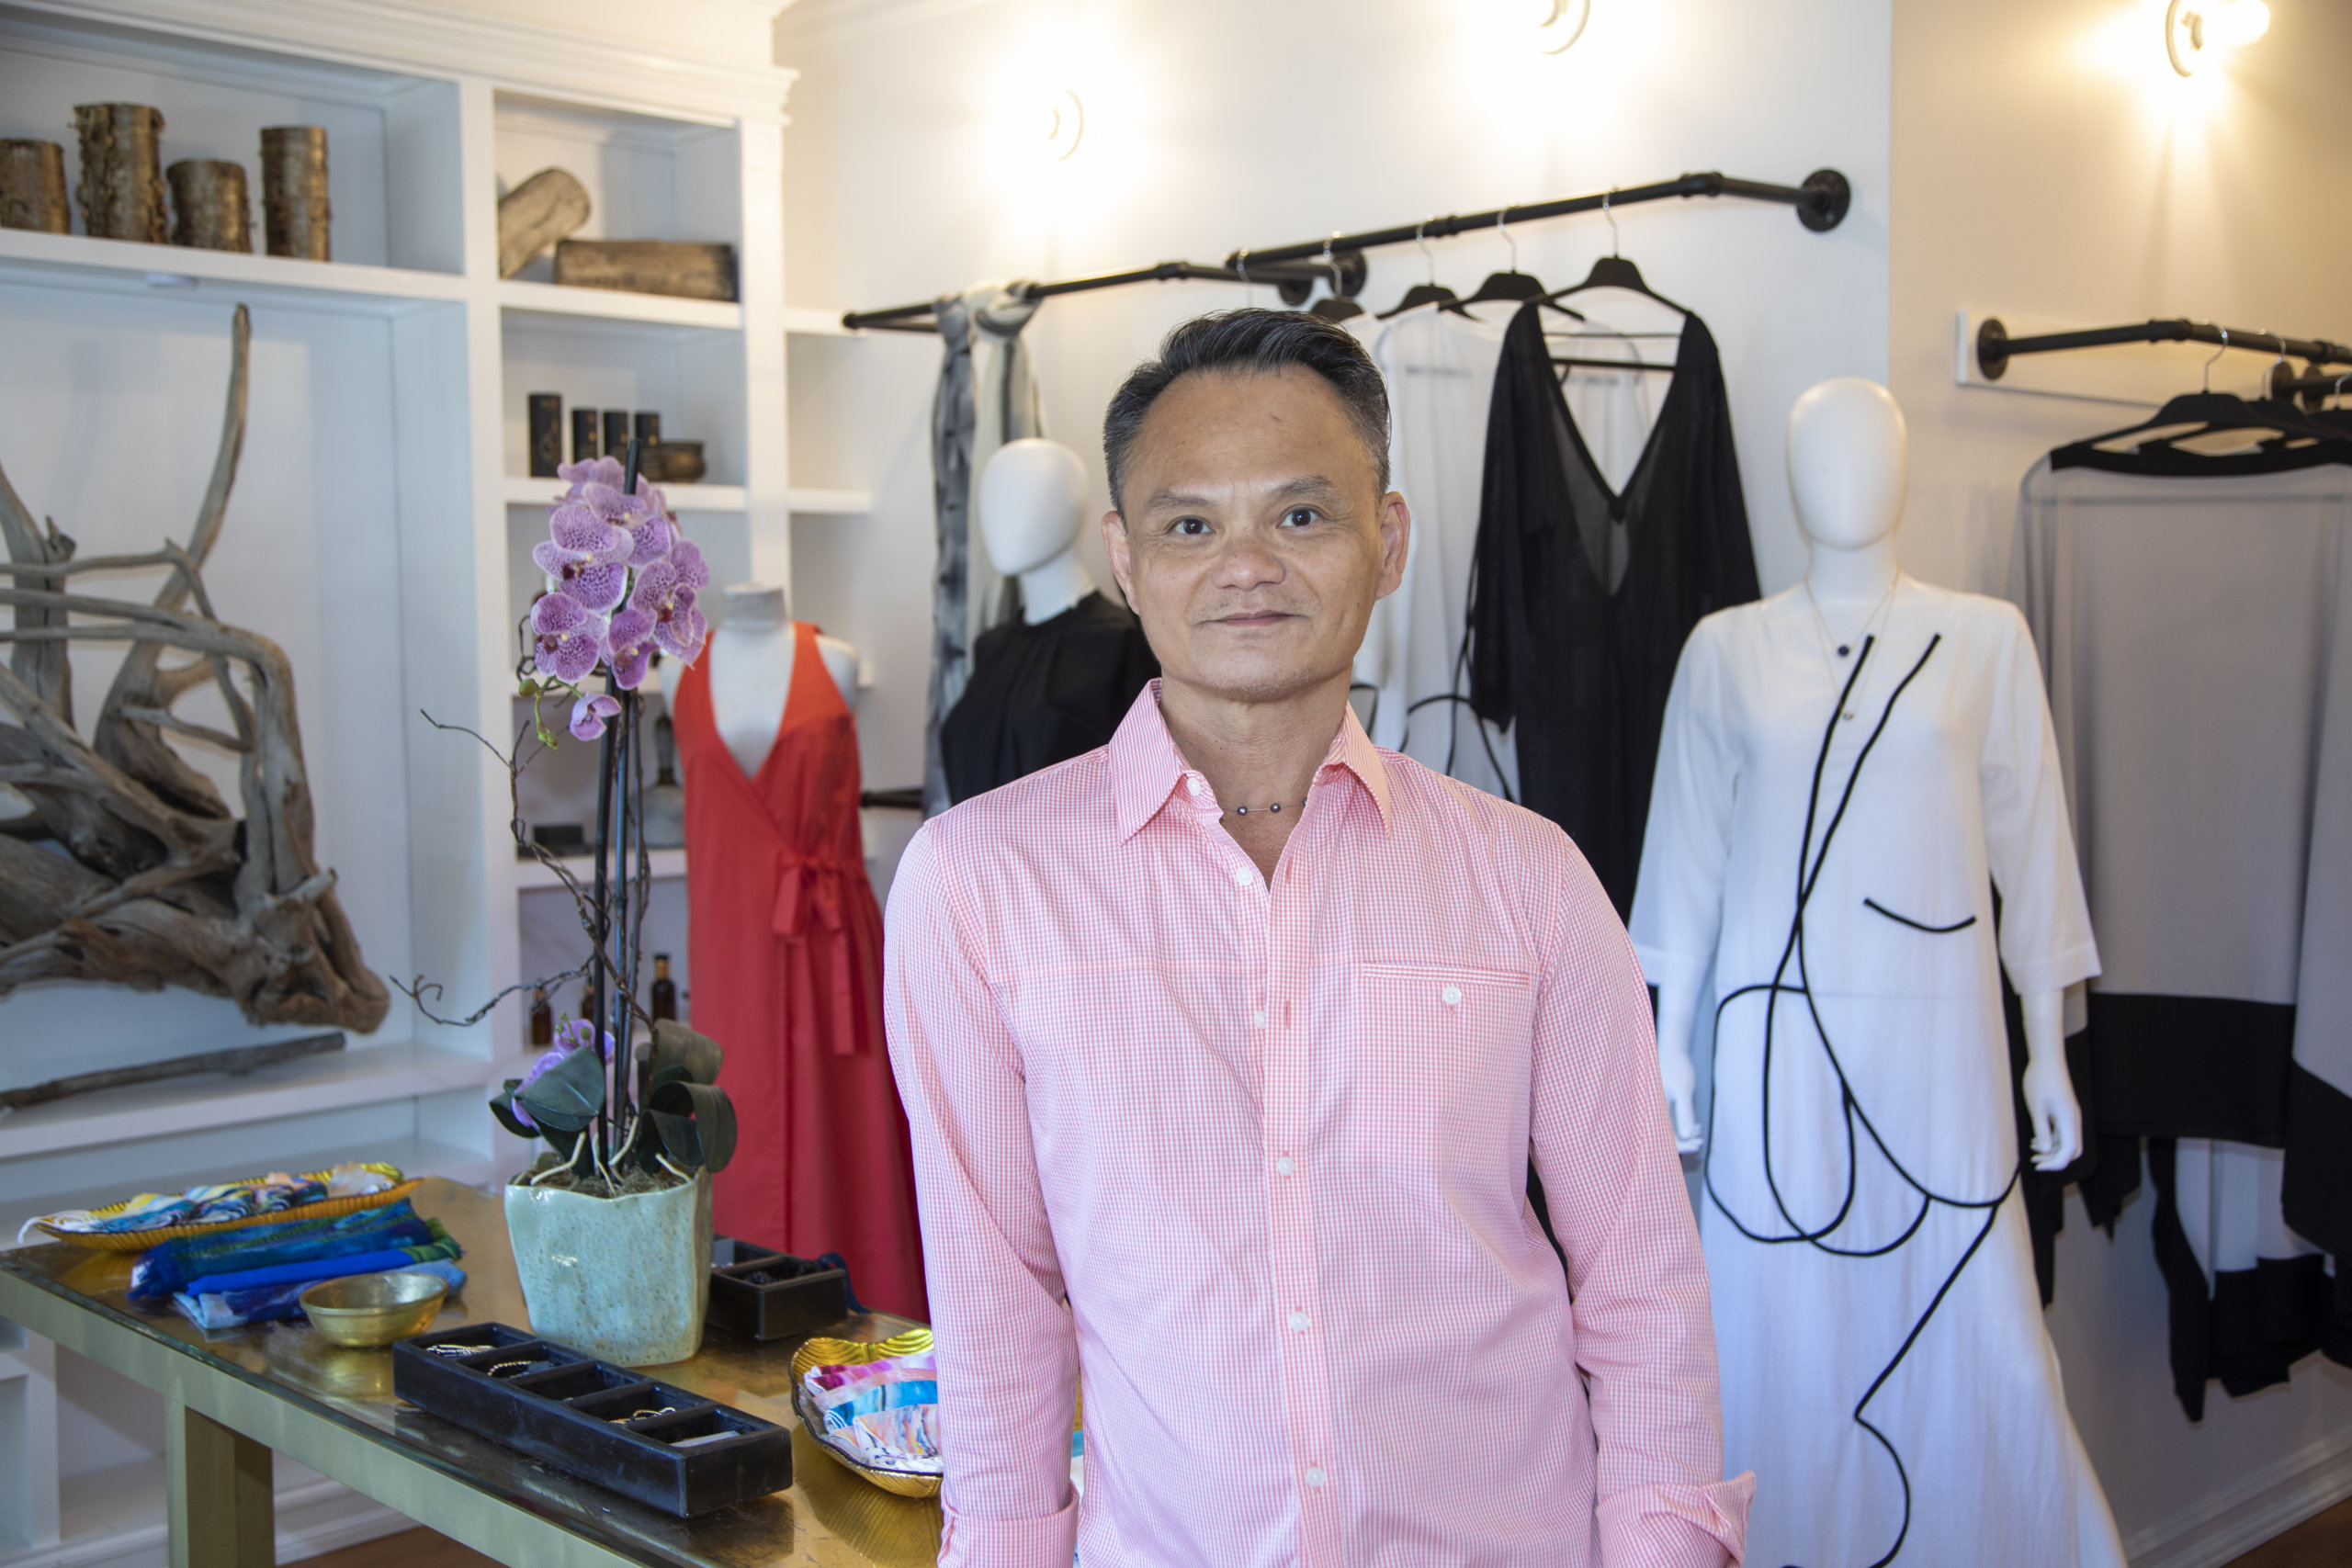 Thuyen Nguyen, wellness expert and new storefront owner